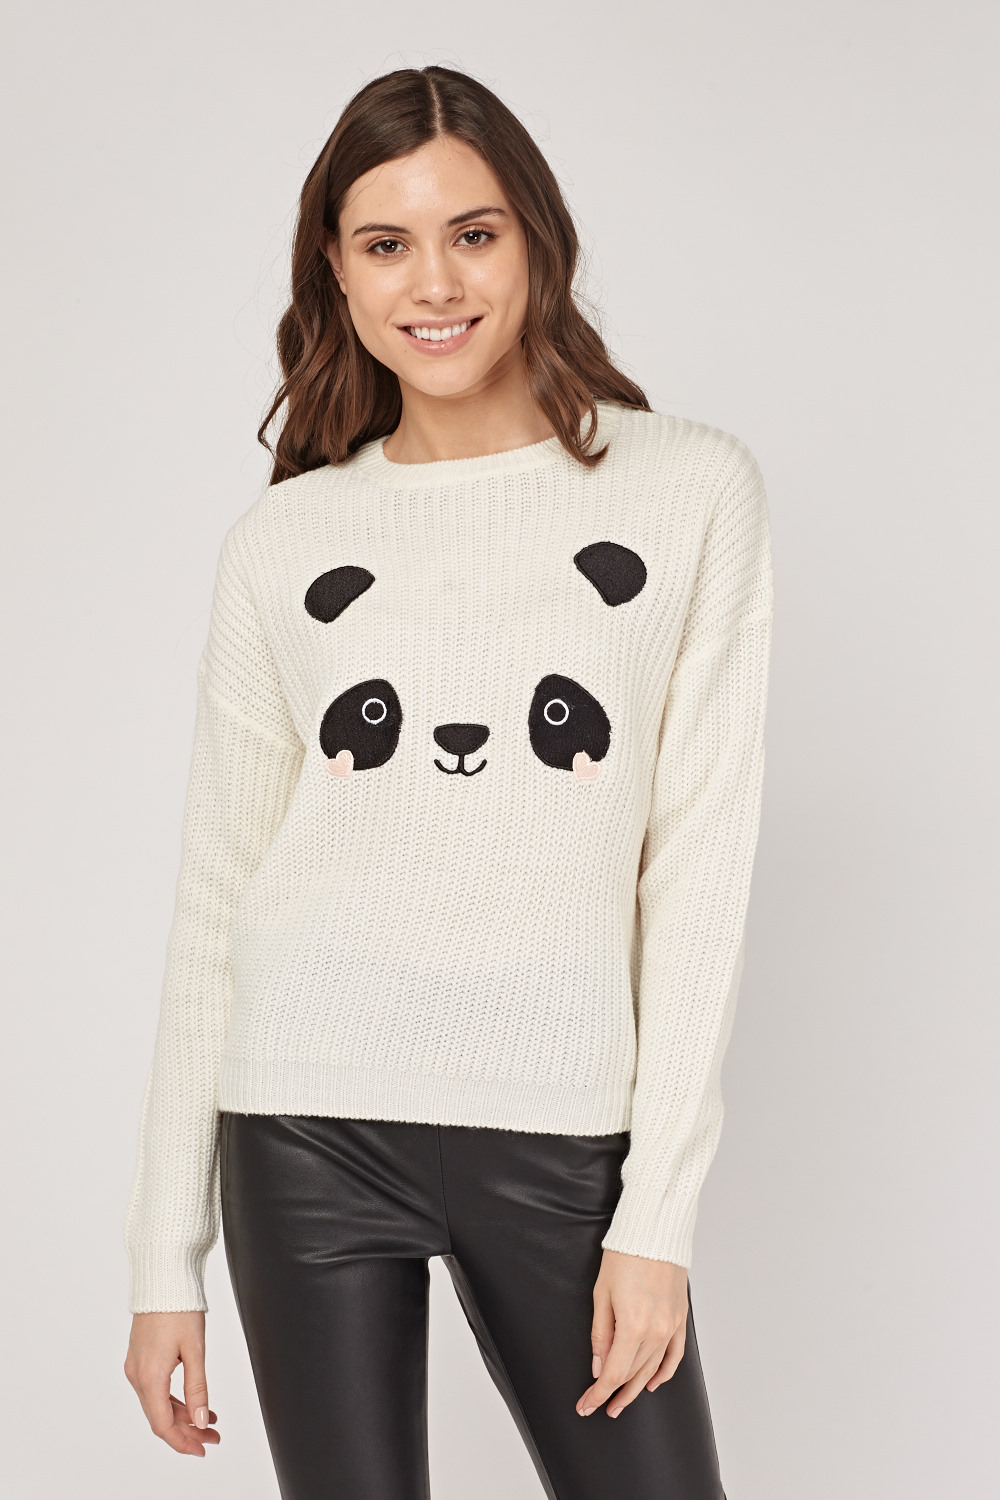 Panda Face Applique Knitted Jumper - Just $7